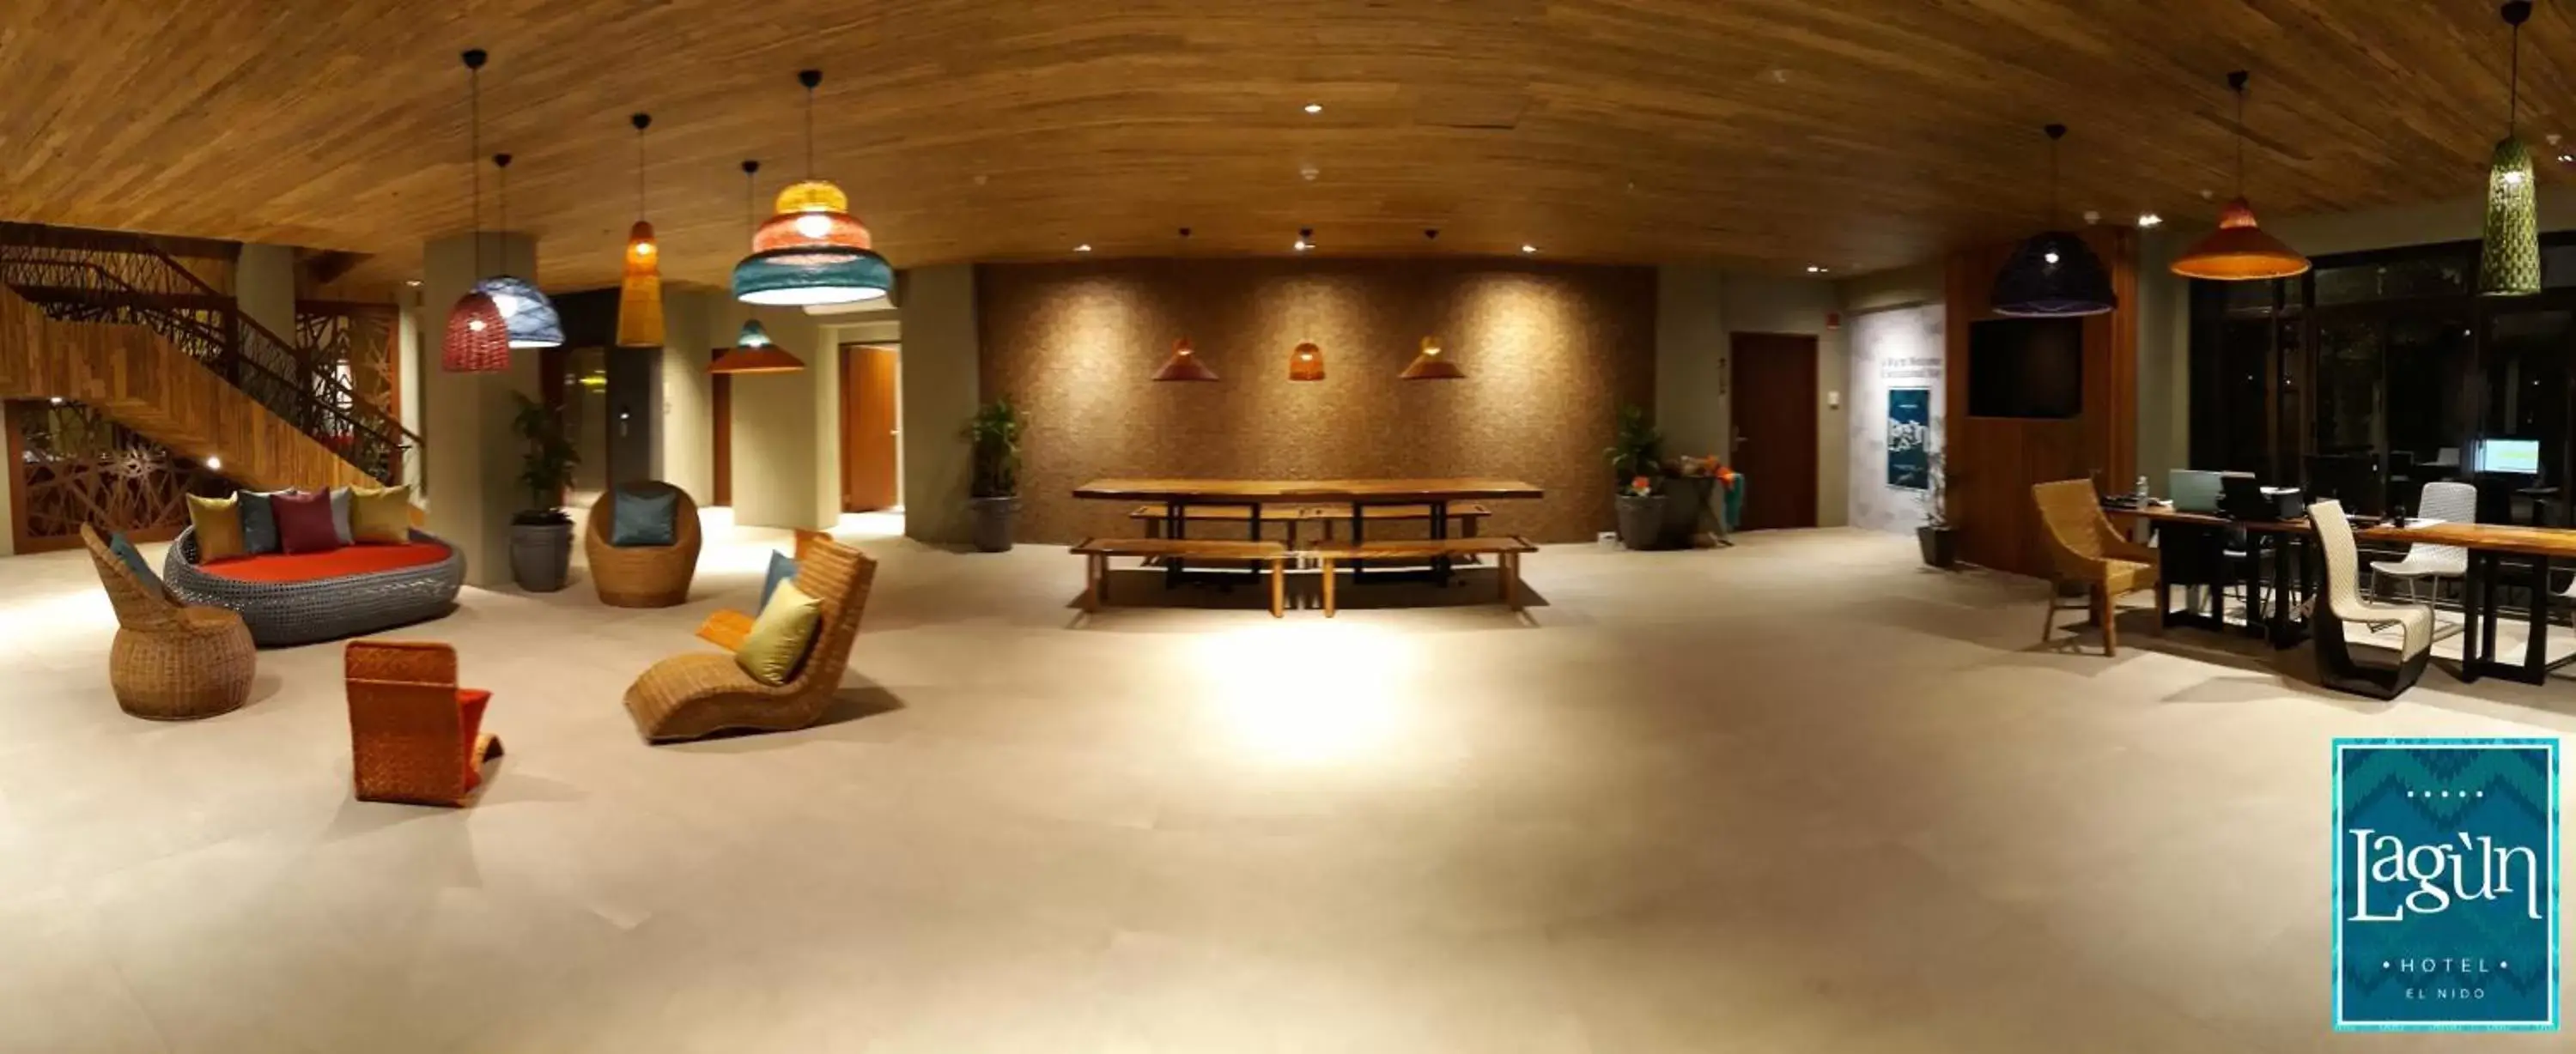 Lobby or reception in Lagùn Hotel